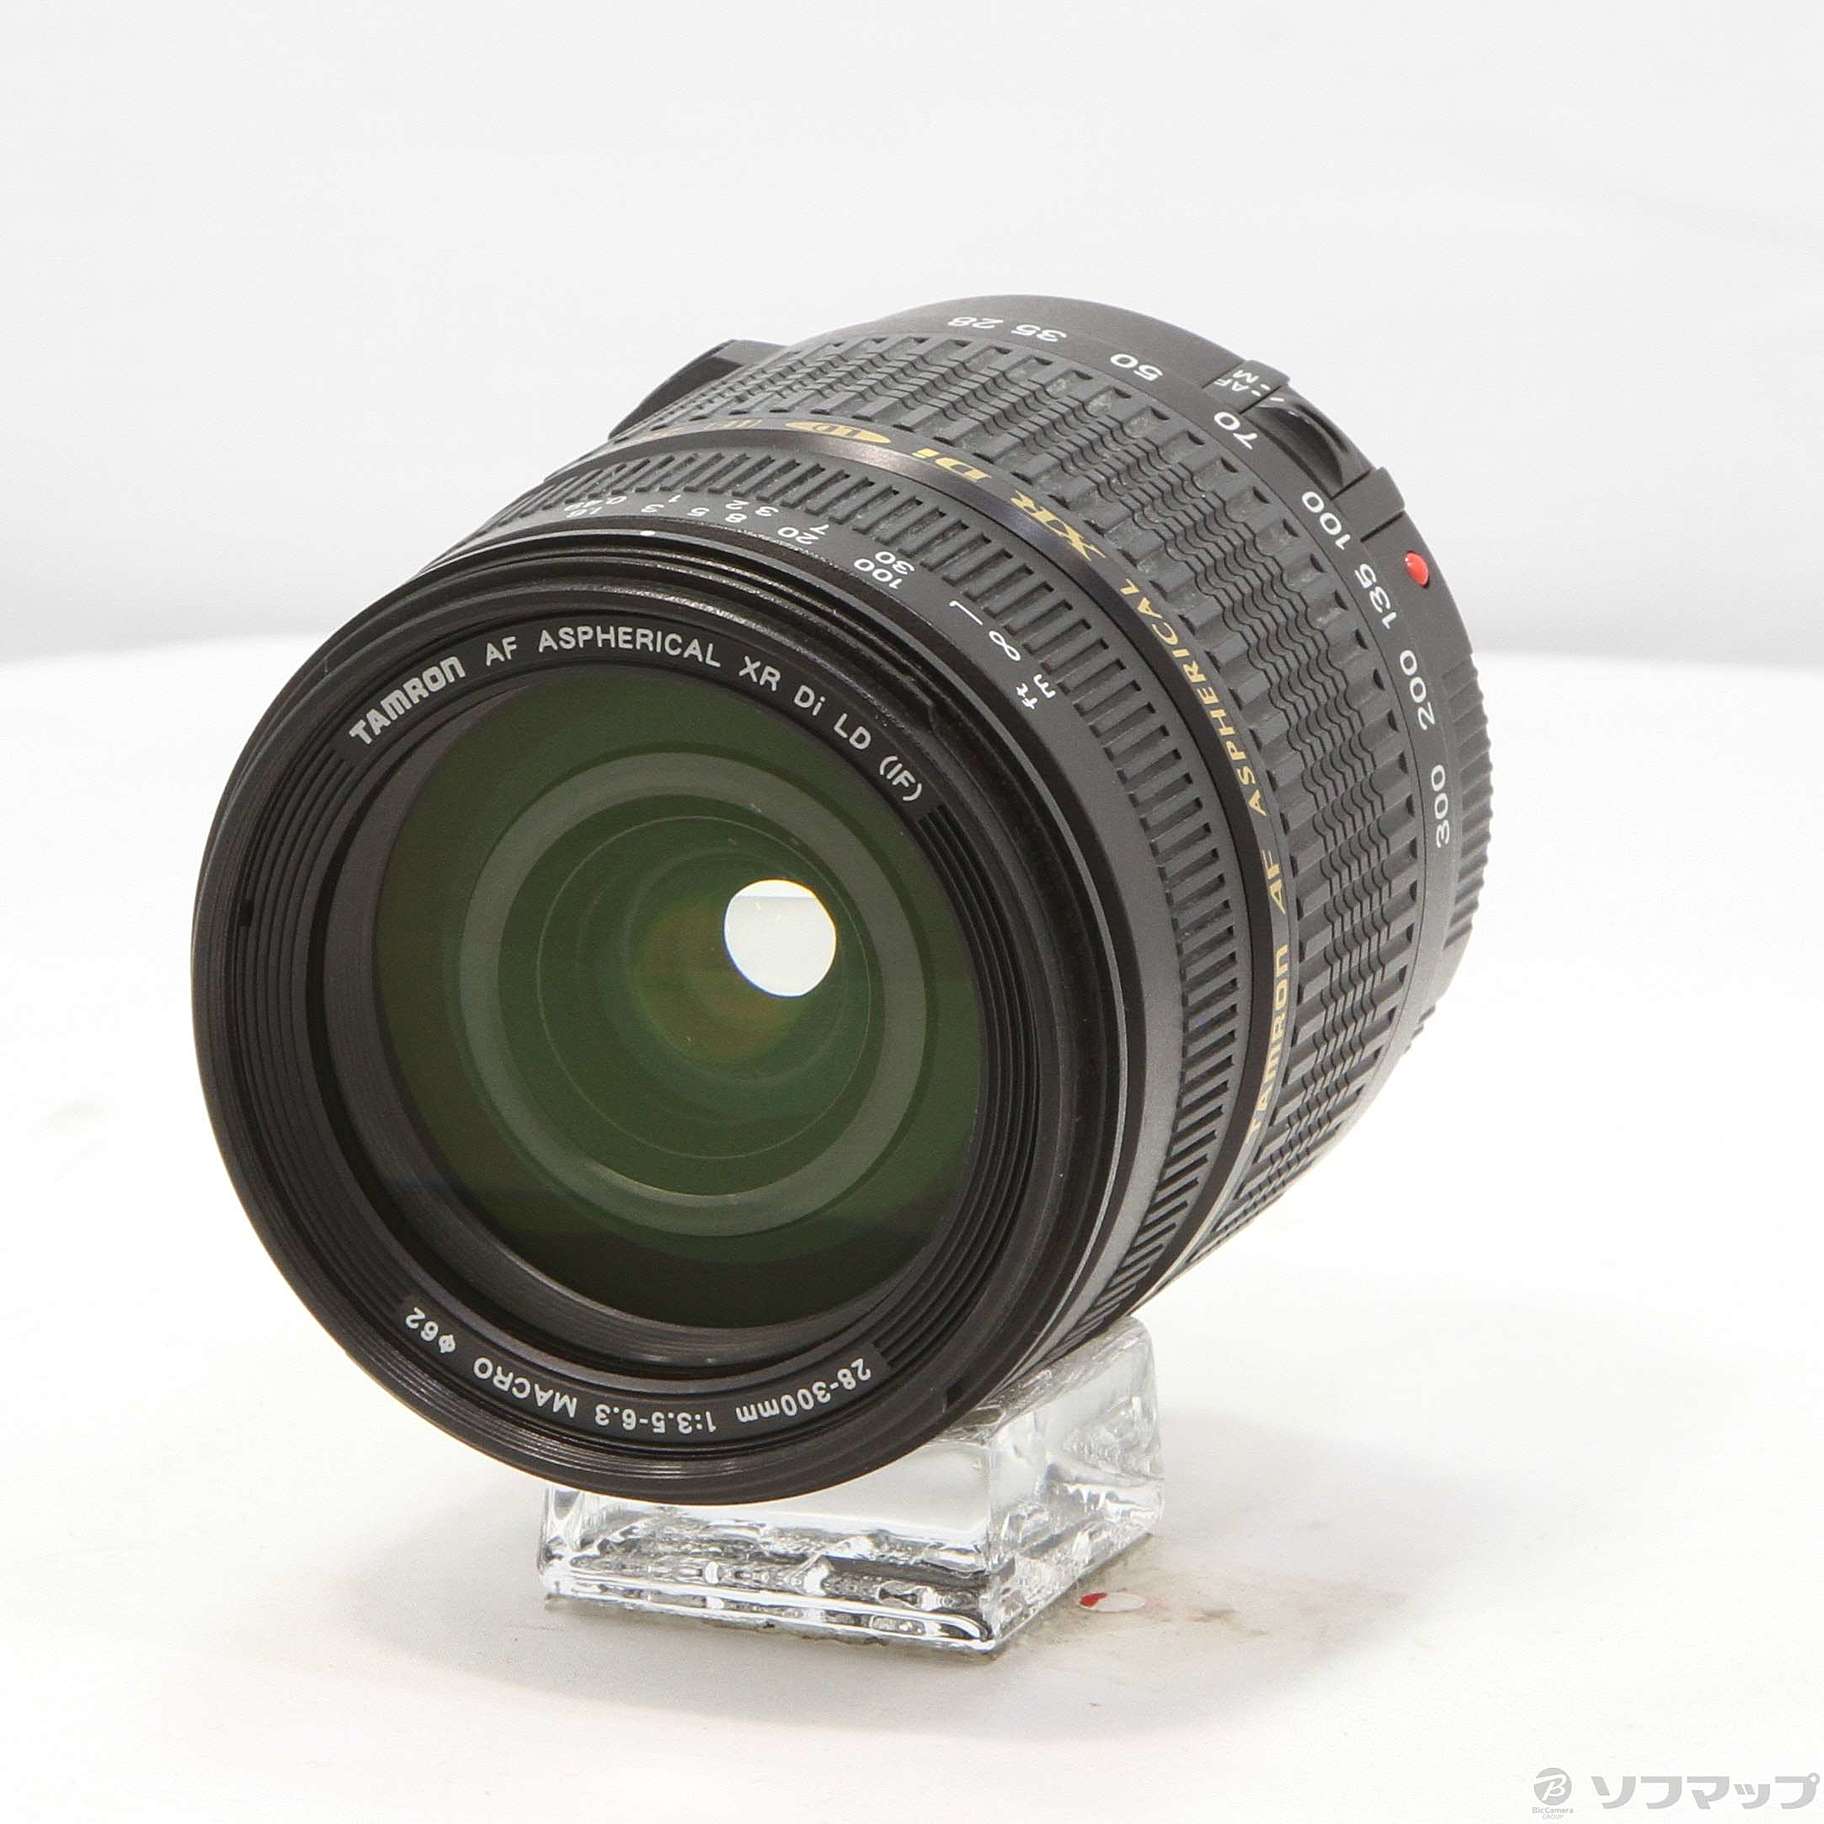 中古】TAMRON AF 28-300mm F3.5-6.3 XR Di A061E Canon用